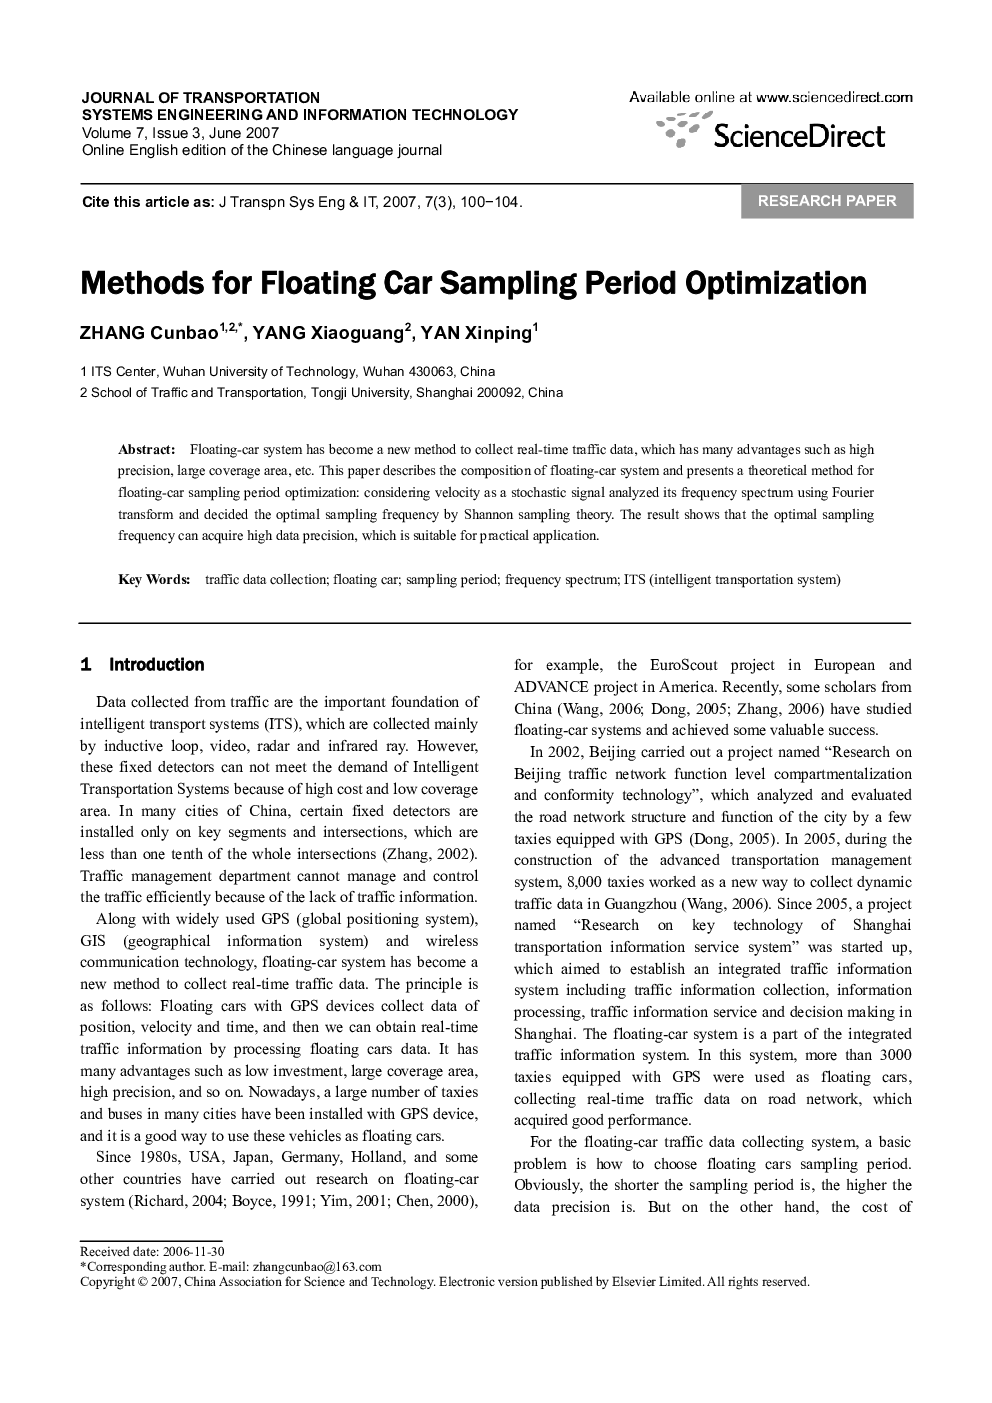 Methods for Floating Car Sampling Period Optimization